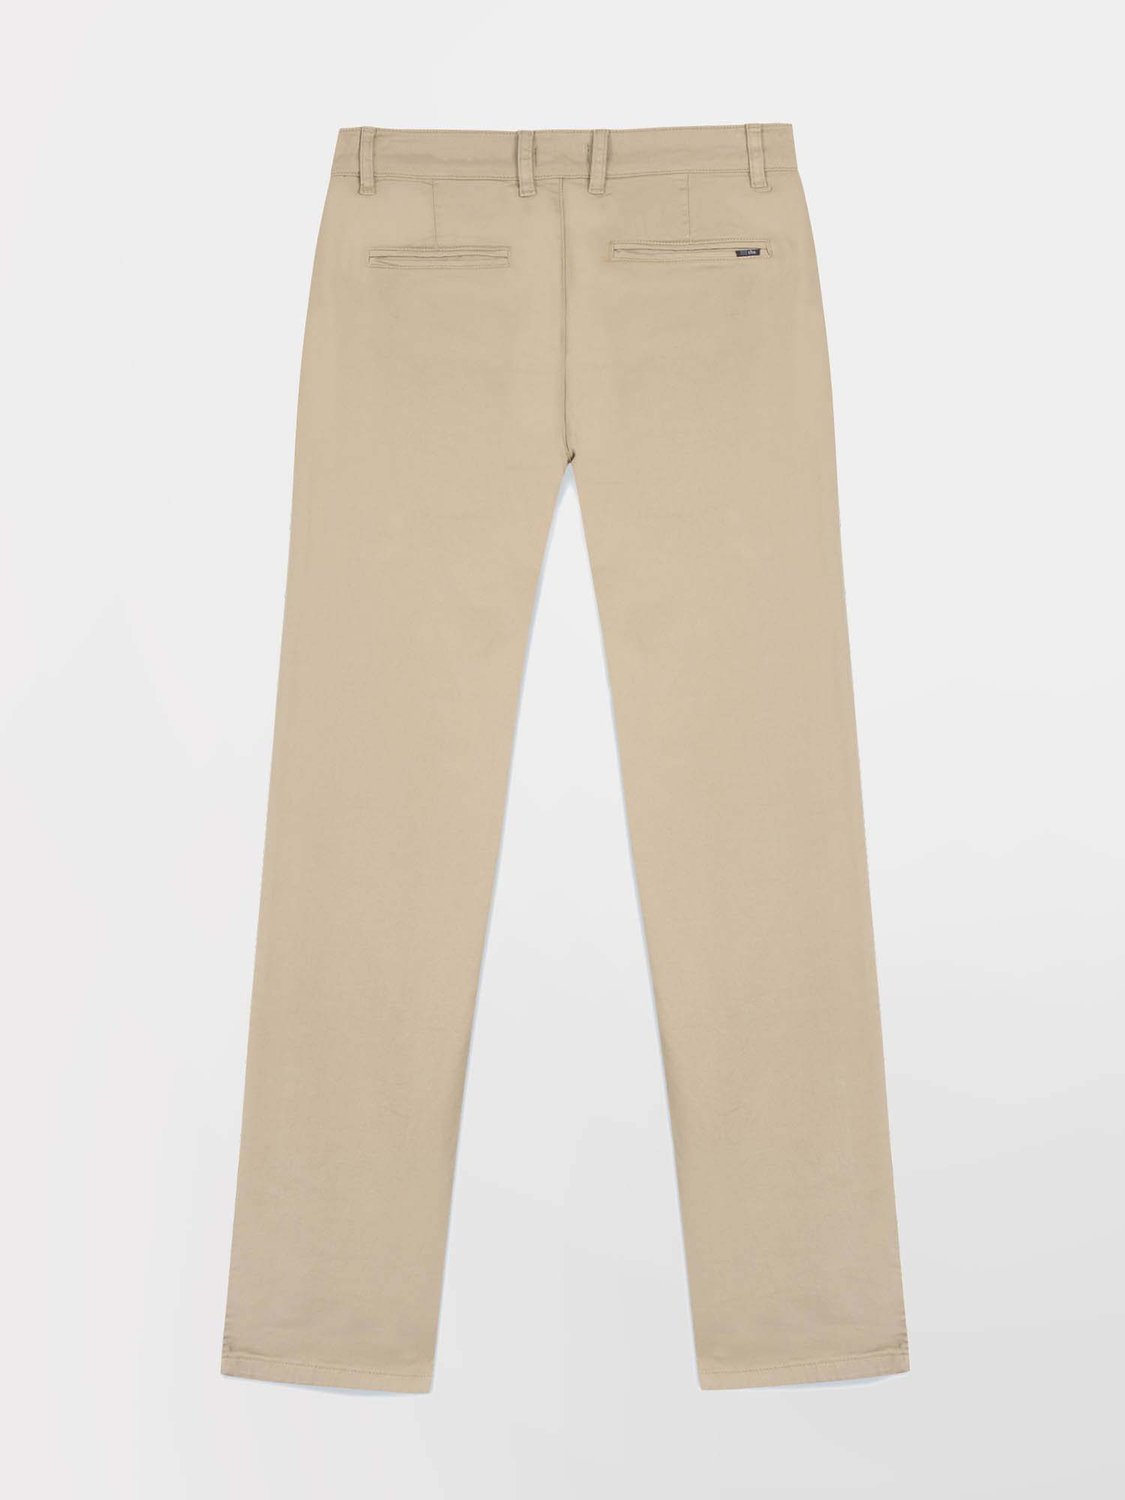 Pantalon Chino Homme Coton Stretch Beige